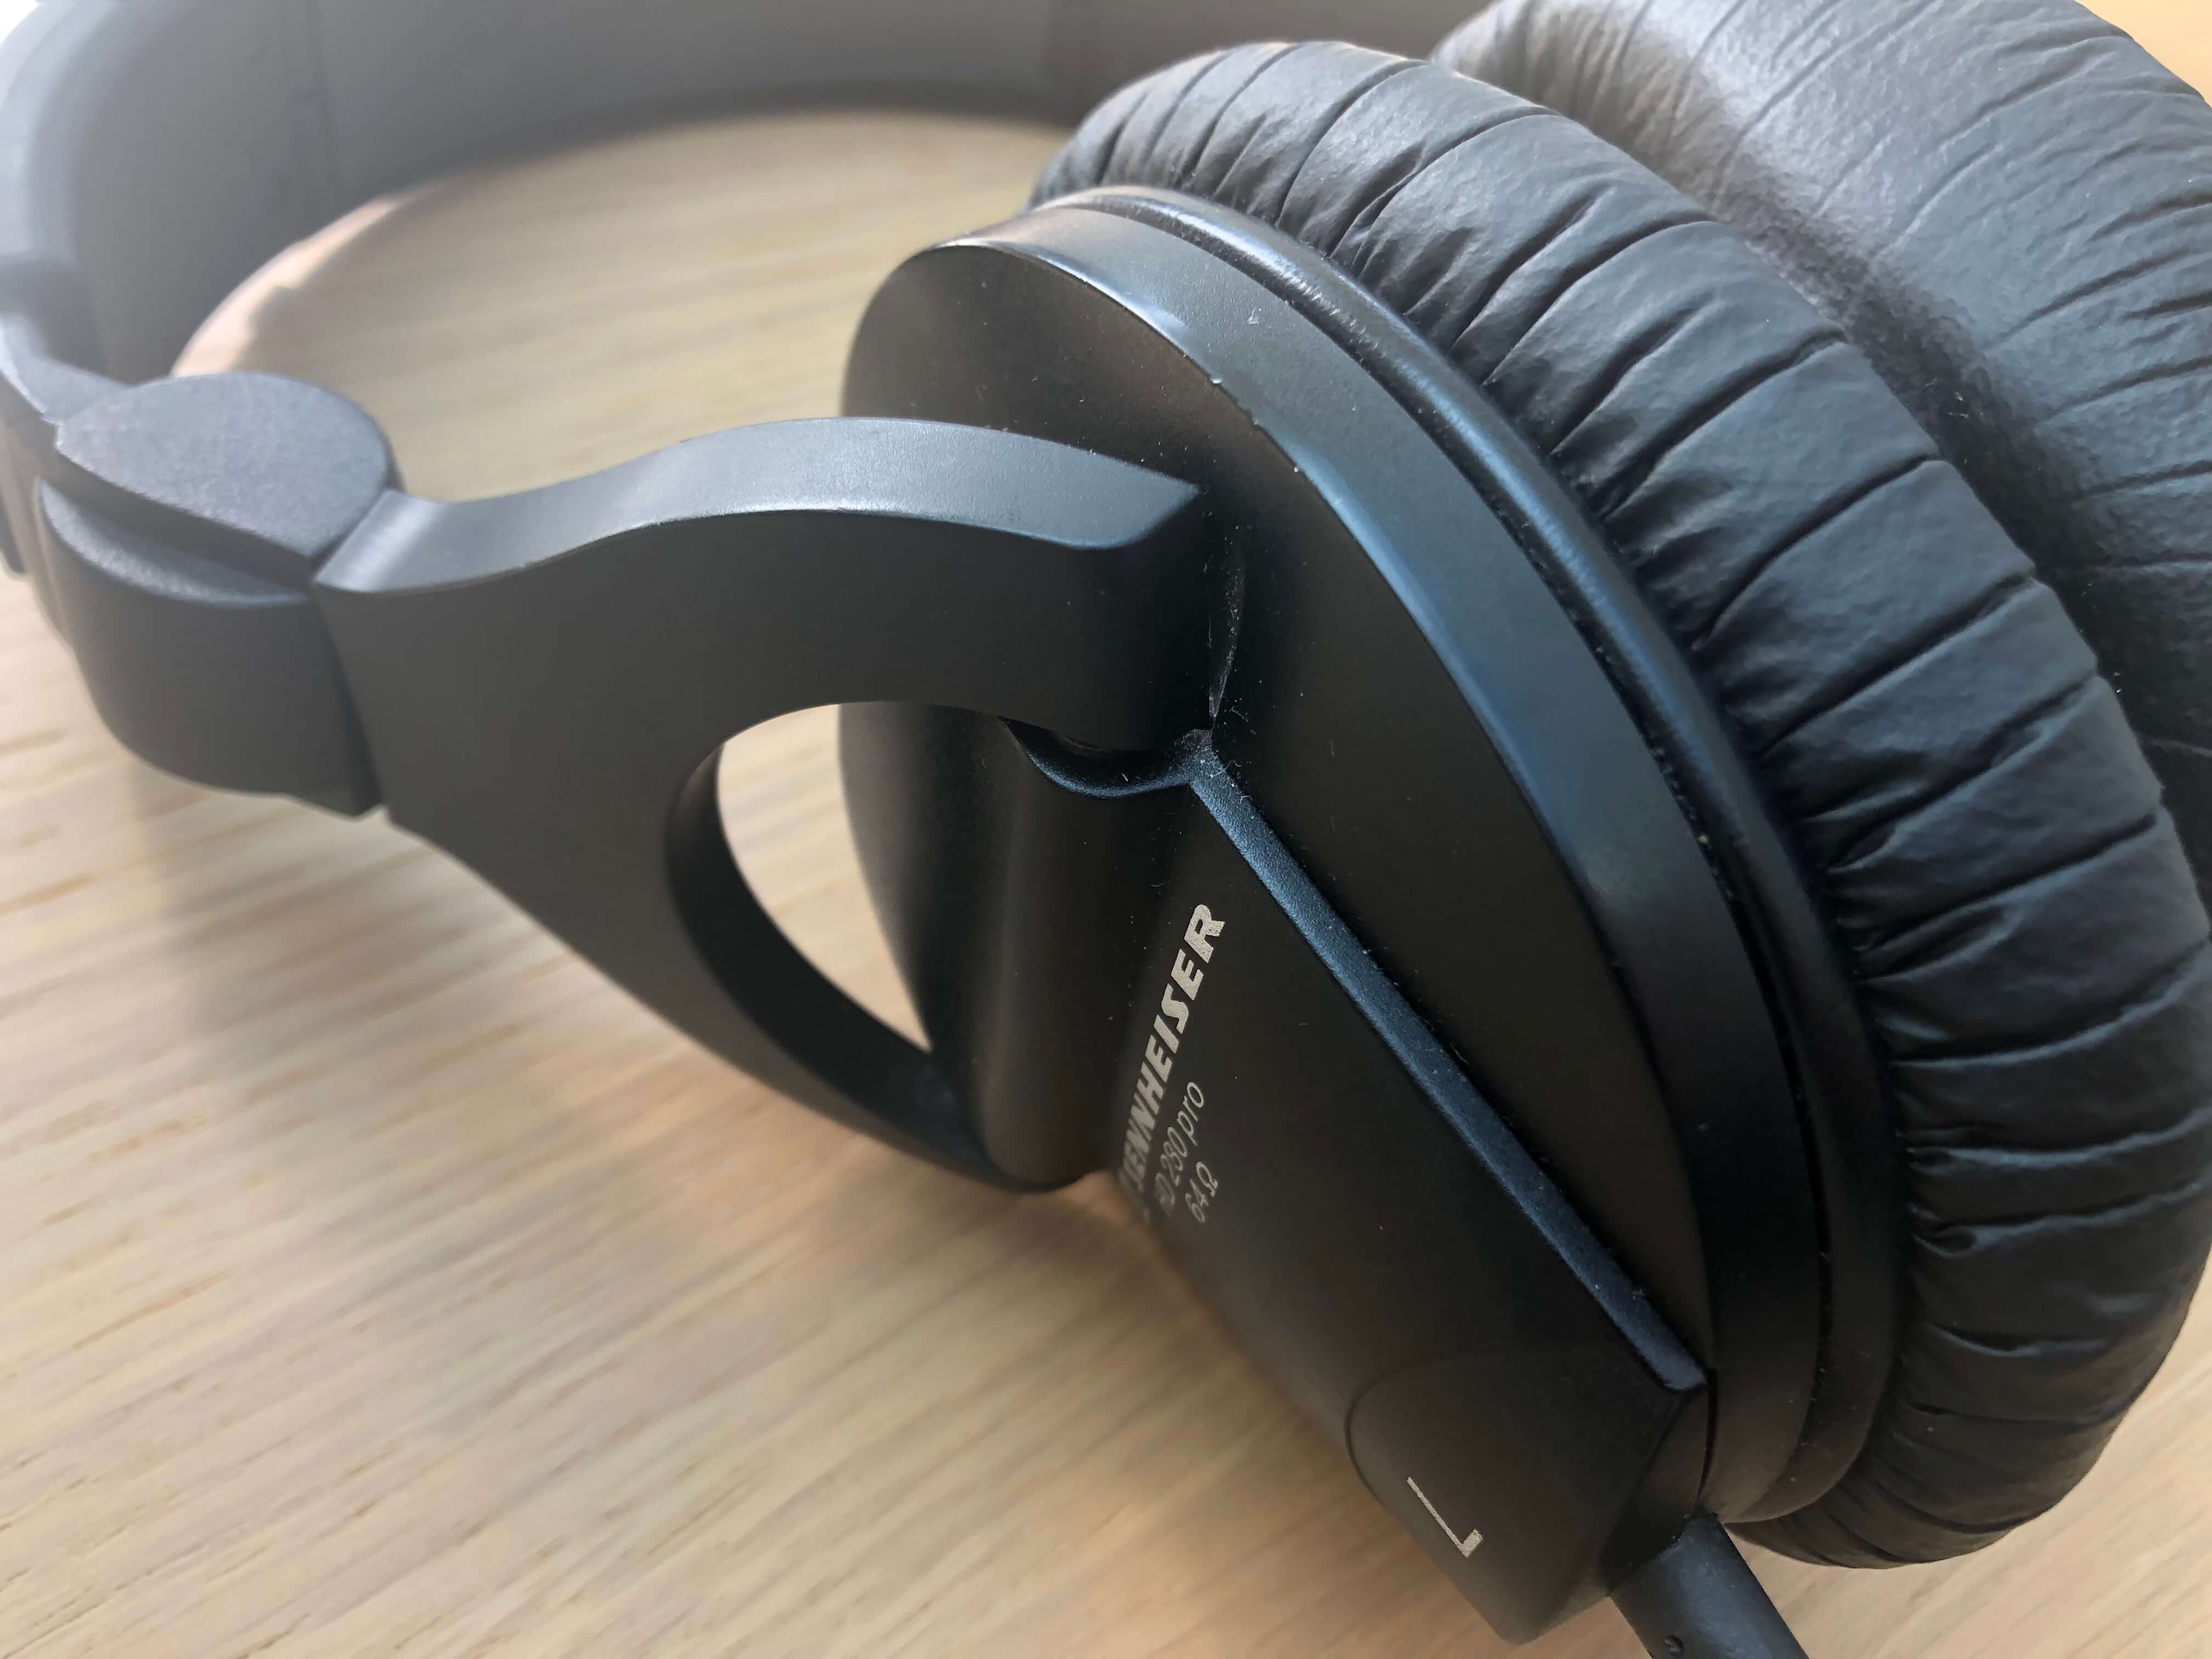 sennheiser 280 hd pro headphone review